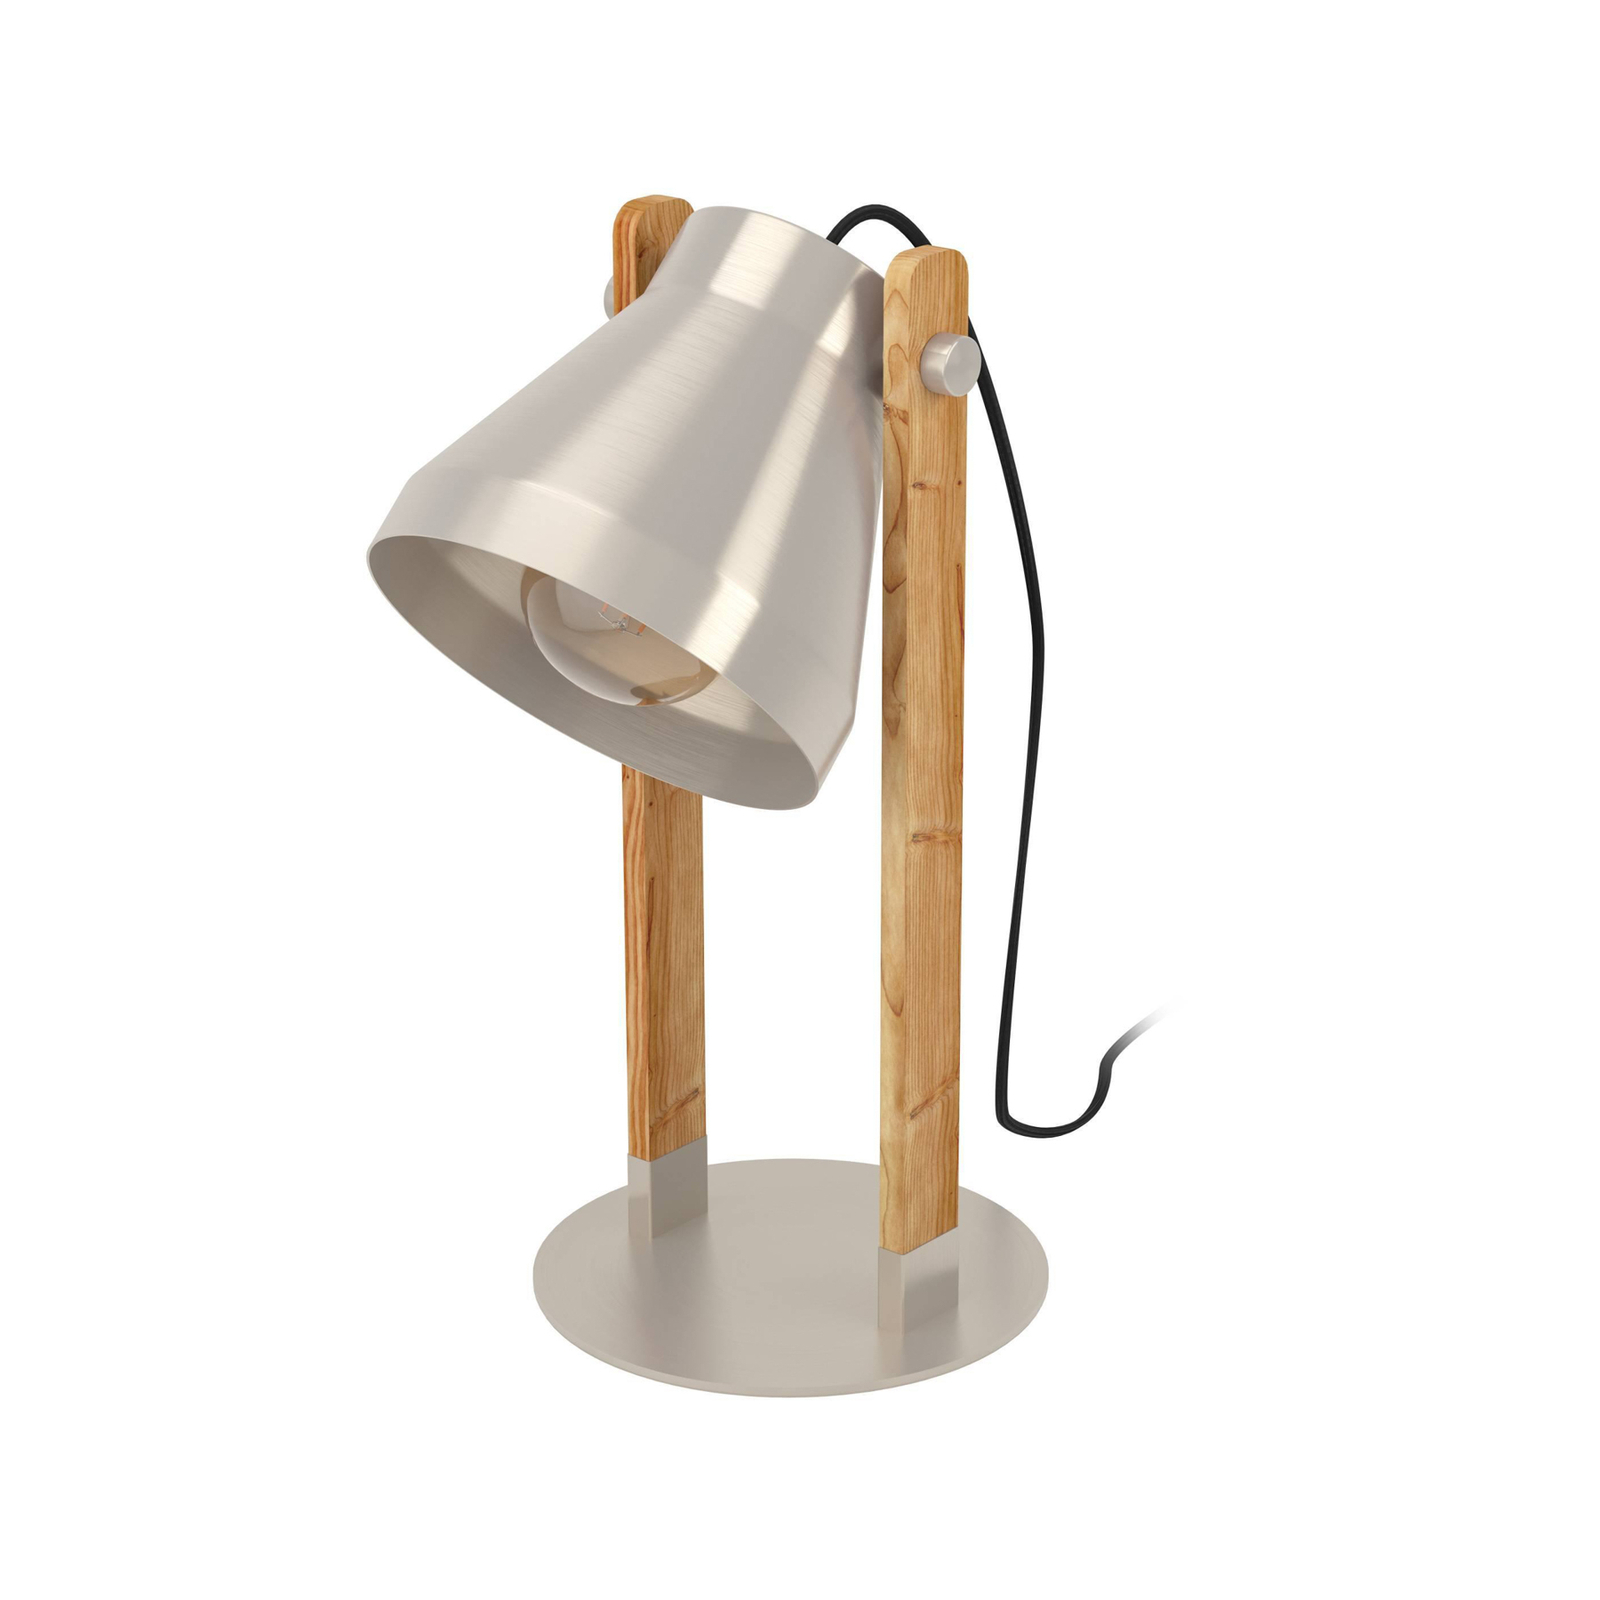 Cawton bordslampa, höjd 38 cm, stål/brunt, stål/trä